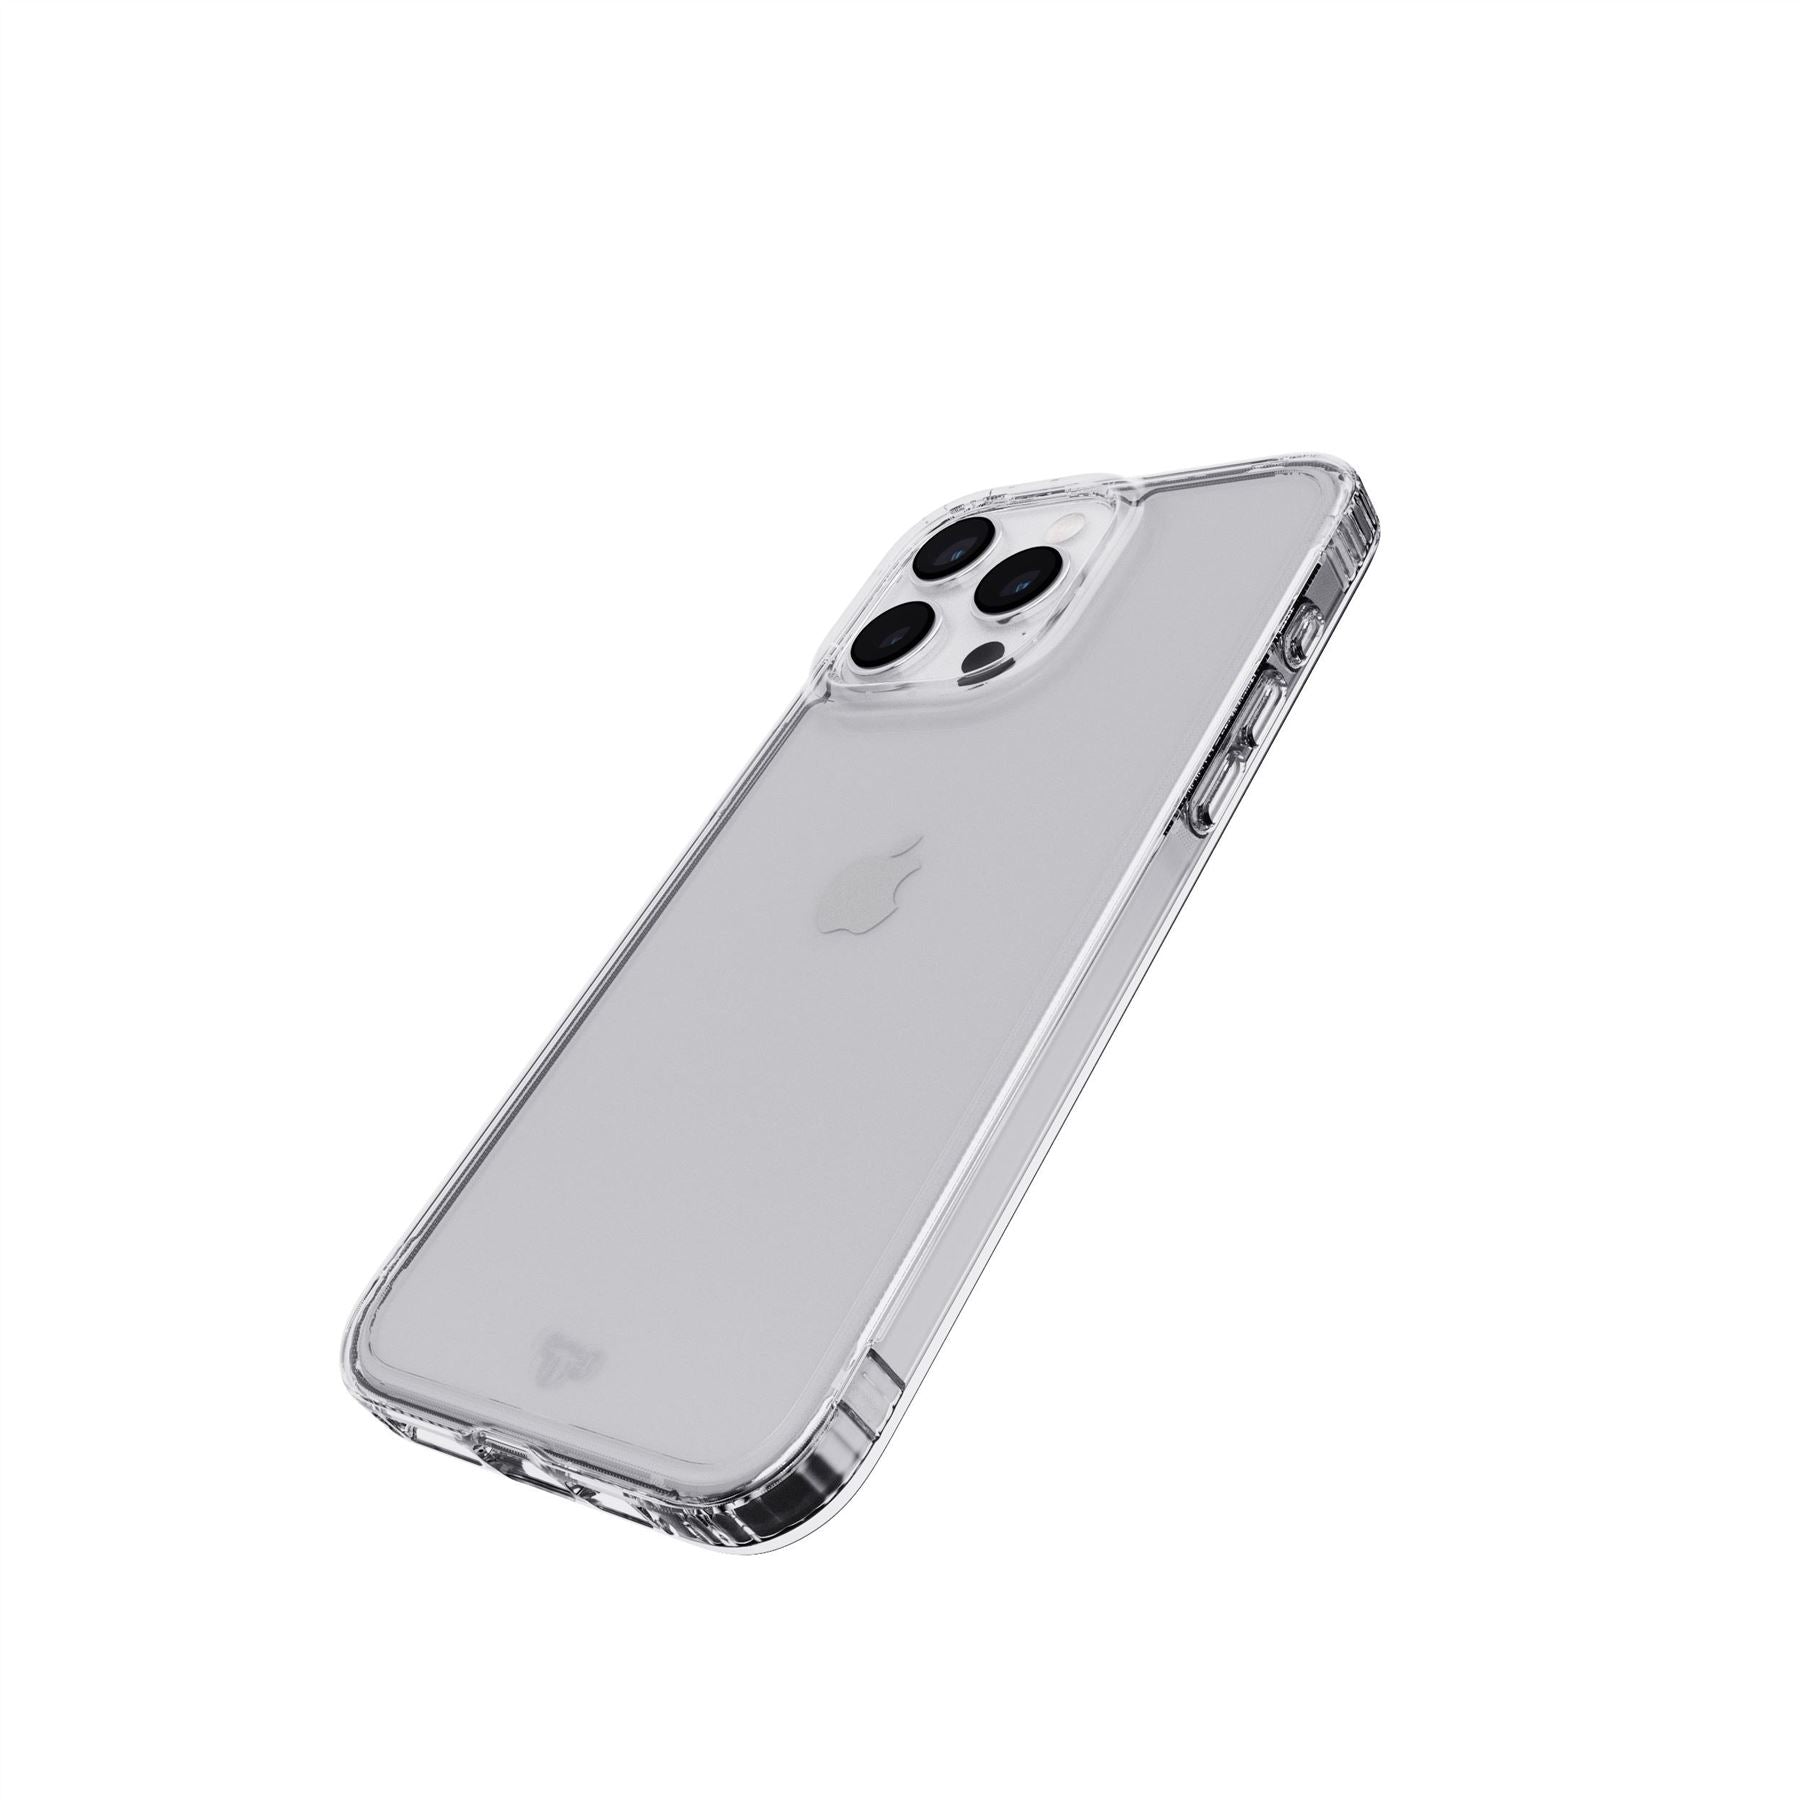 Apple iPhone 12 Mini Review: Compact, Powerful & A Breath Of Fresh Air